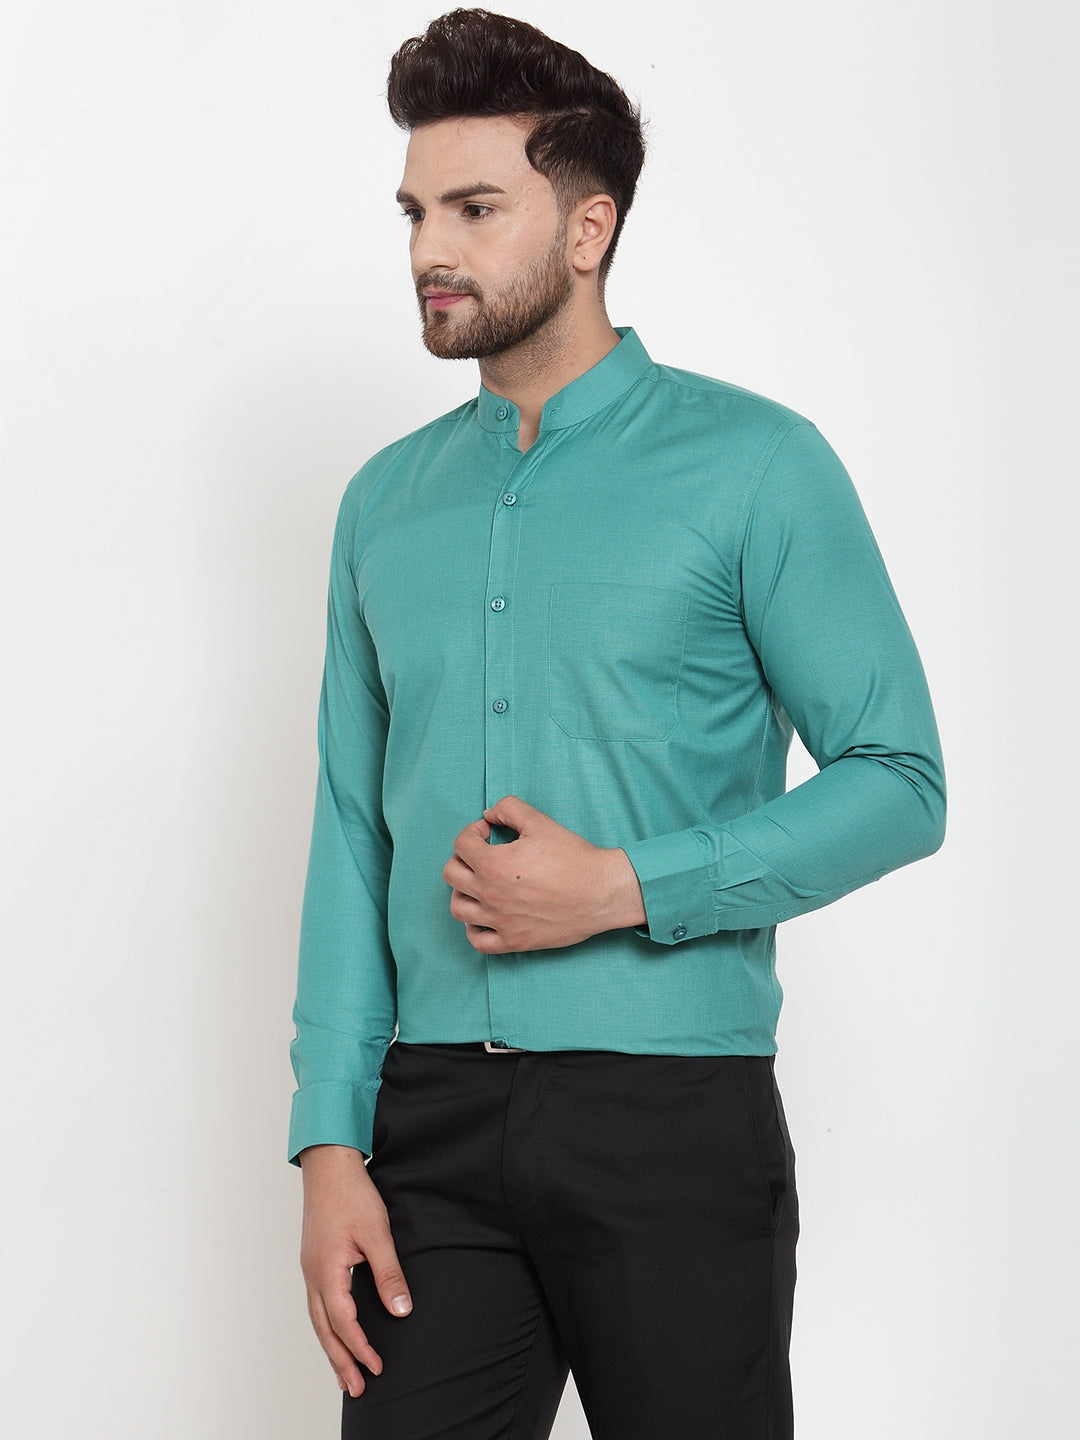 Men's Green Cotton Solid Mandarin Collar Formal Shirts ( SF 757Pista ) - Jainish